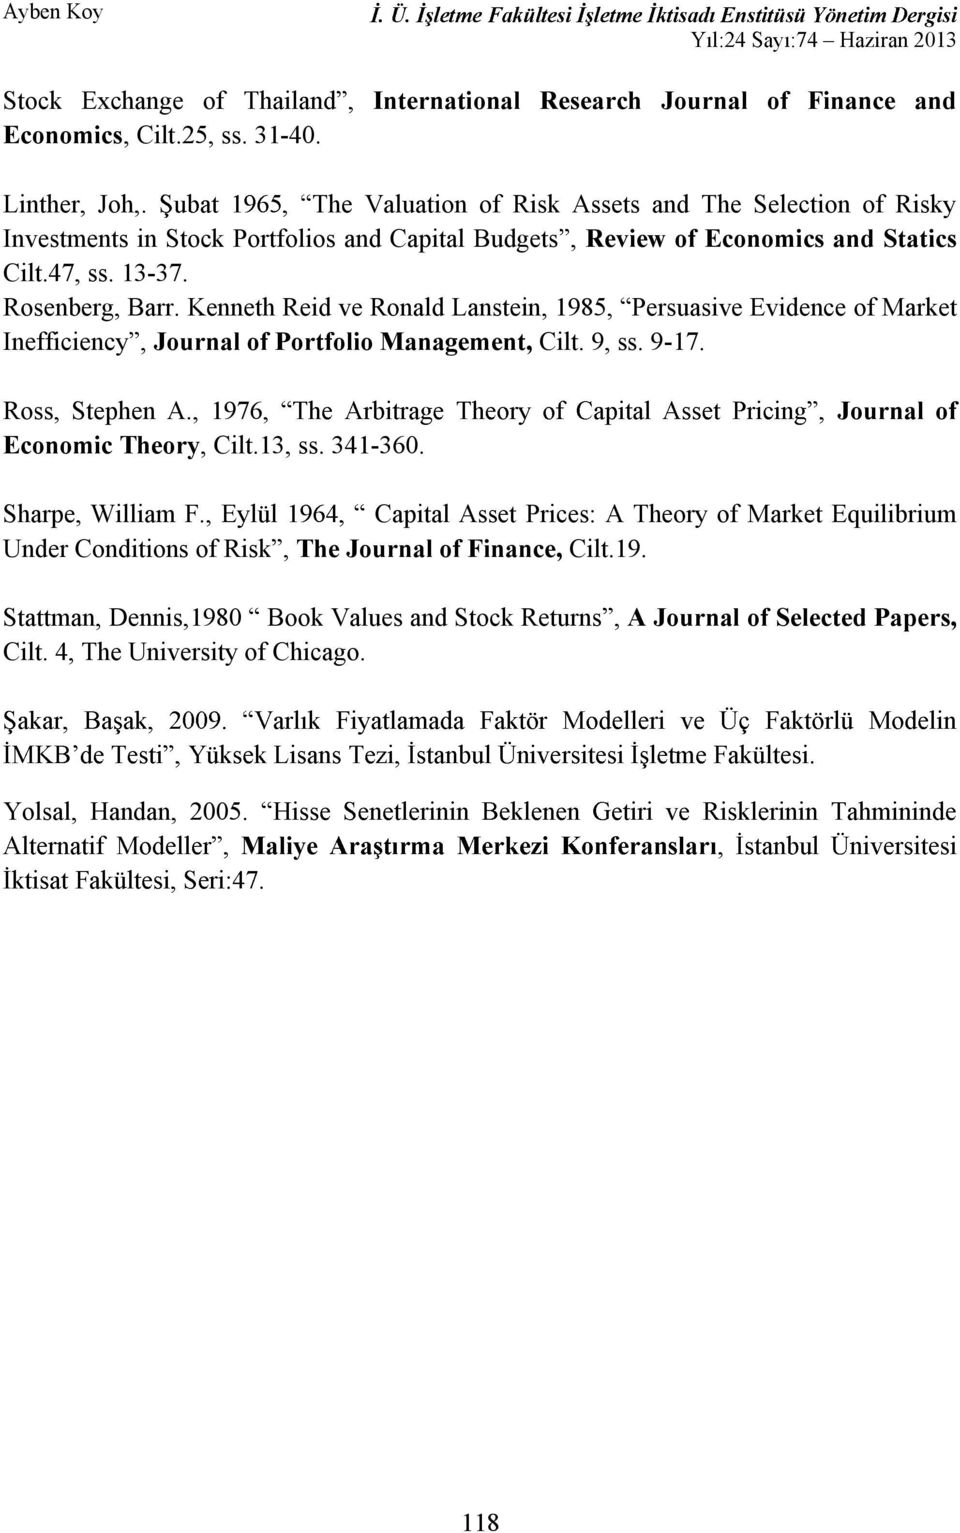 Kenneth Reid ve Ronald Lanstein 1985 Persuasive Evidence of Market Inefficiency Journal of Portfolio Management Cilt. 9 ss. 9-17. Ross Stephen A. 1976 Economic Theory Cilt.13 ss. 341-360.